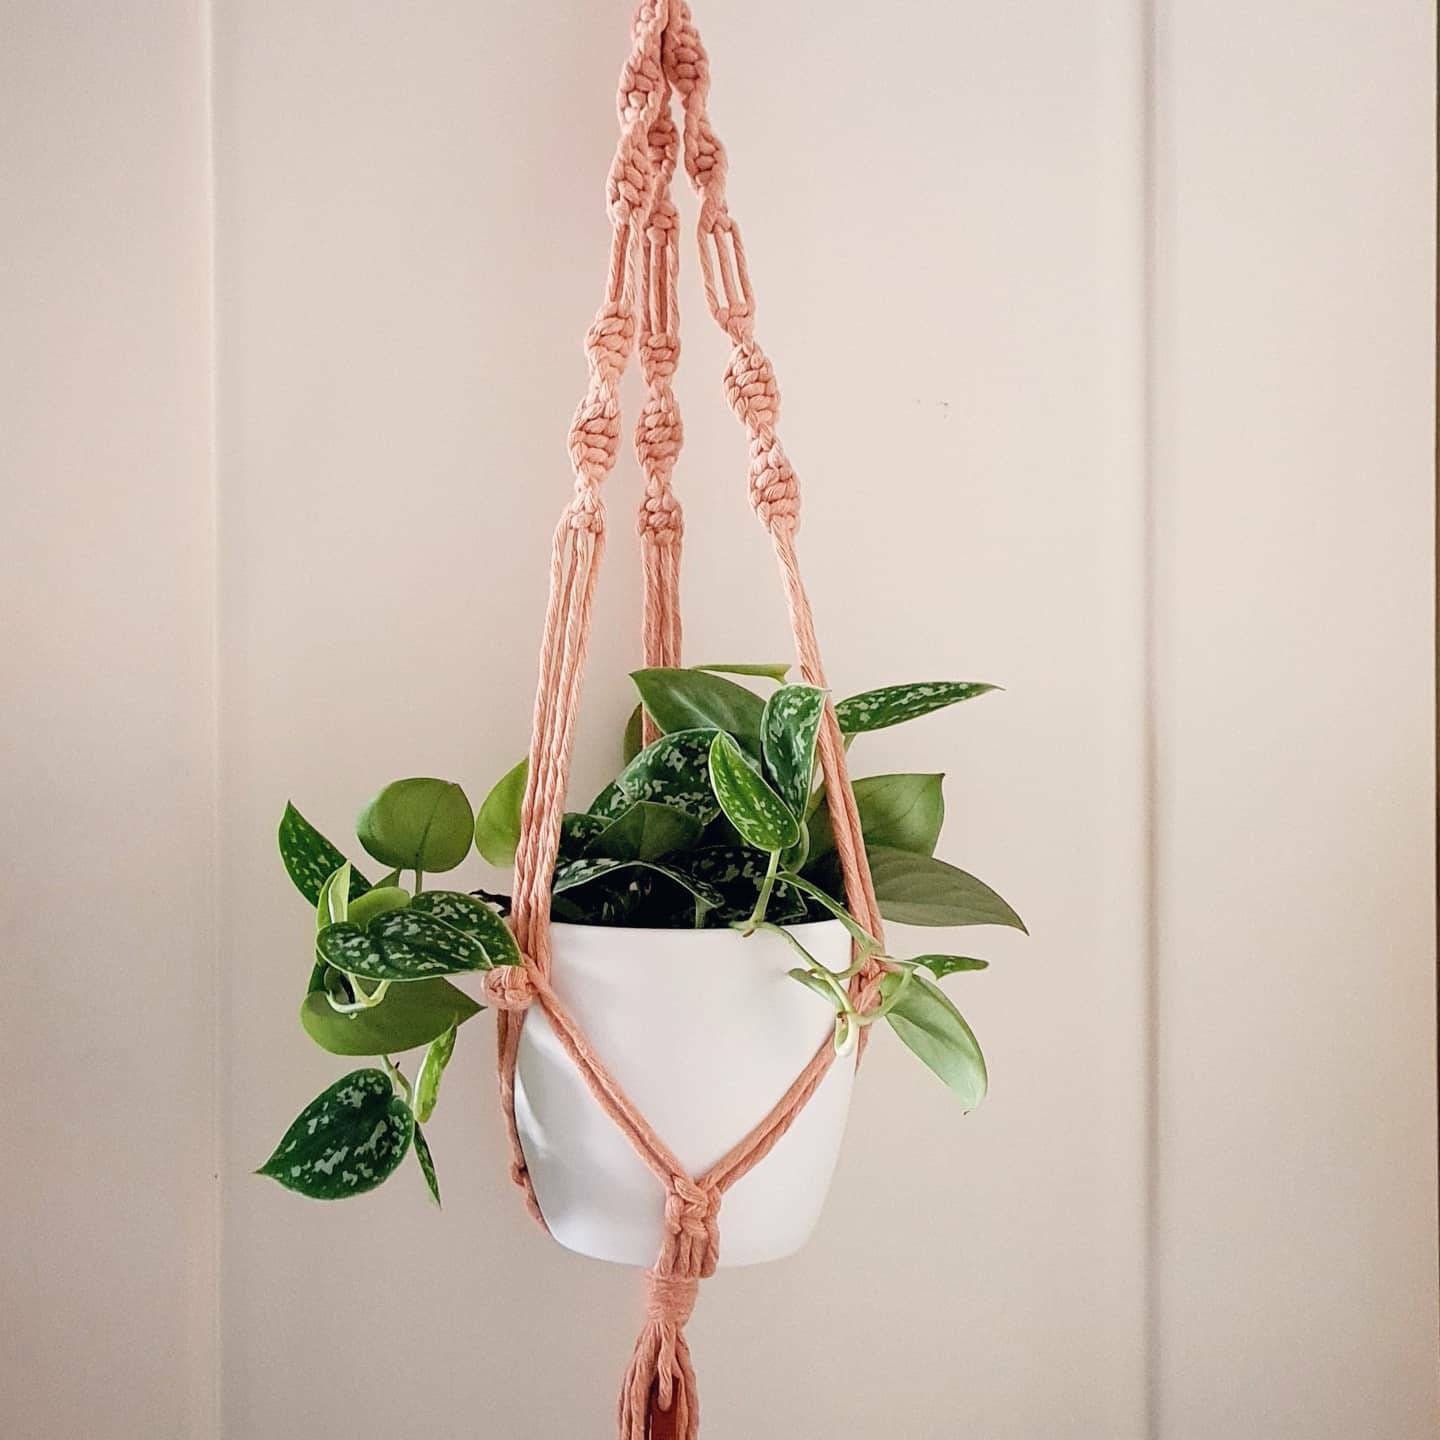 Macrame Plant Hanger Kit - Make Your Own Diy Knotted Plant Holder